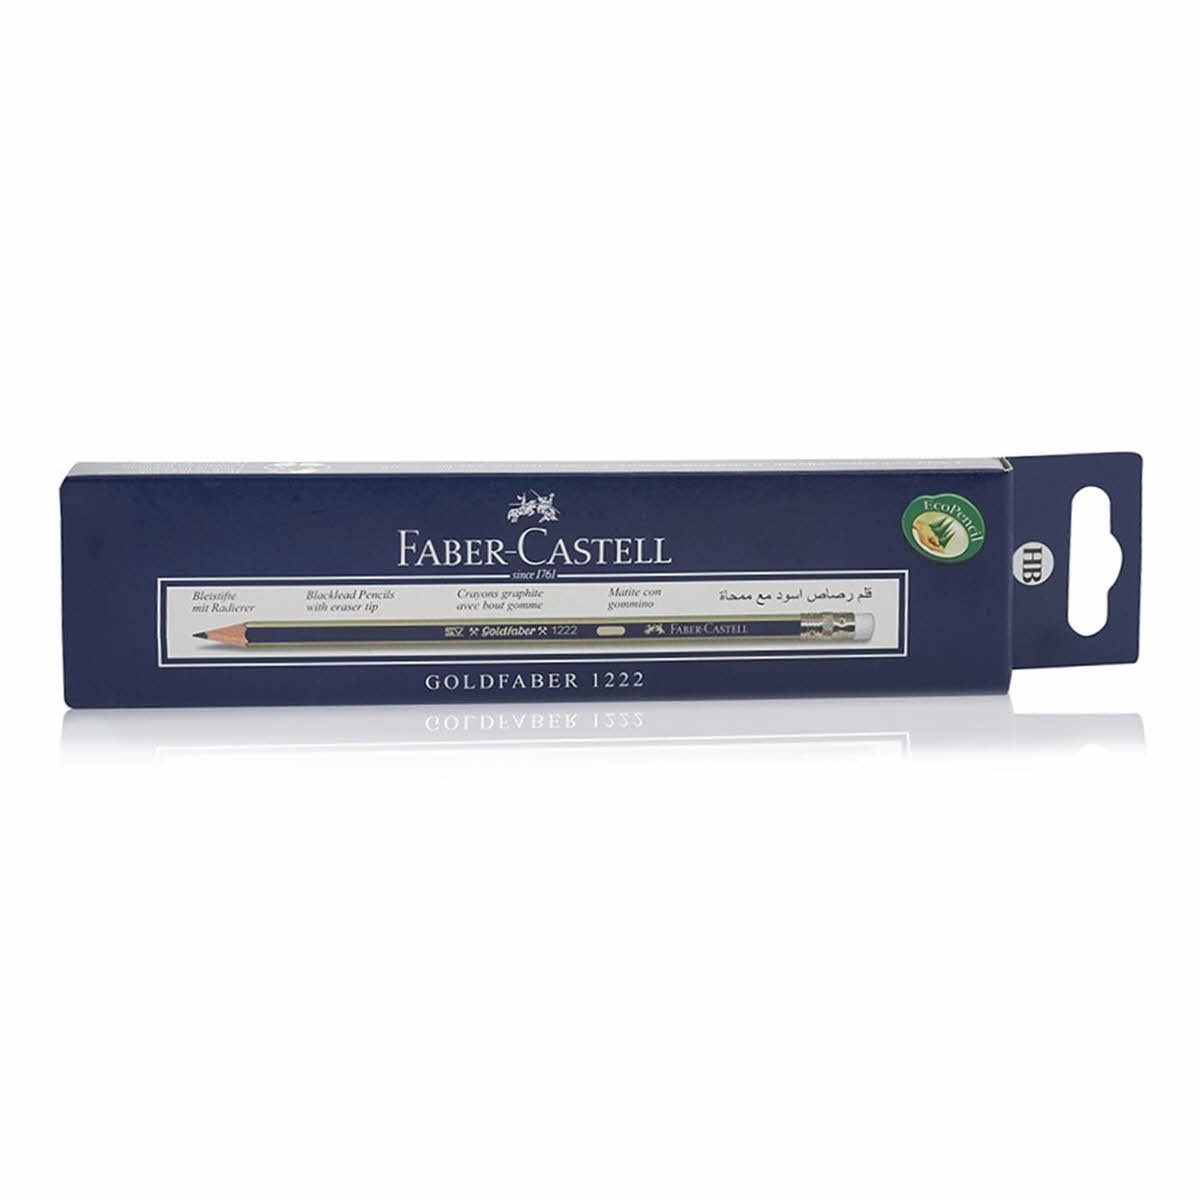 Faber-Castell Bonanza Lead Pencil Hb WITH ERASER